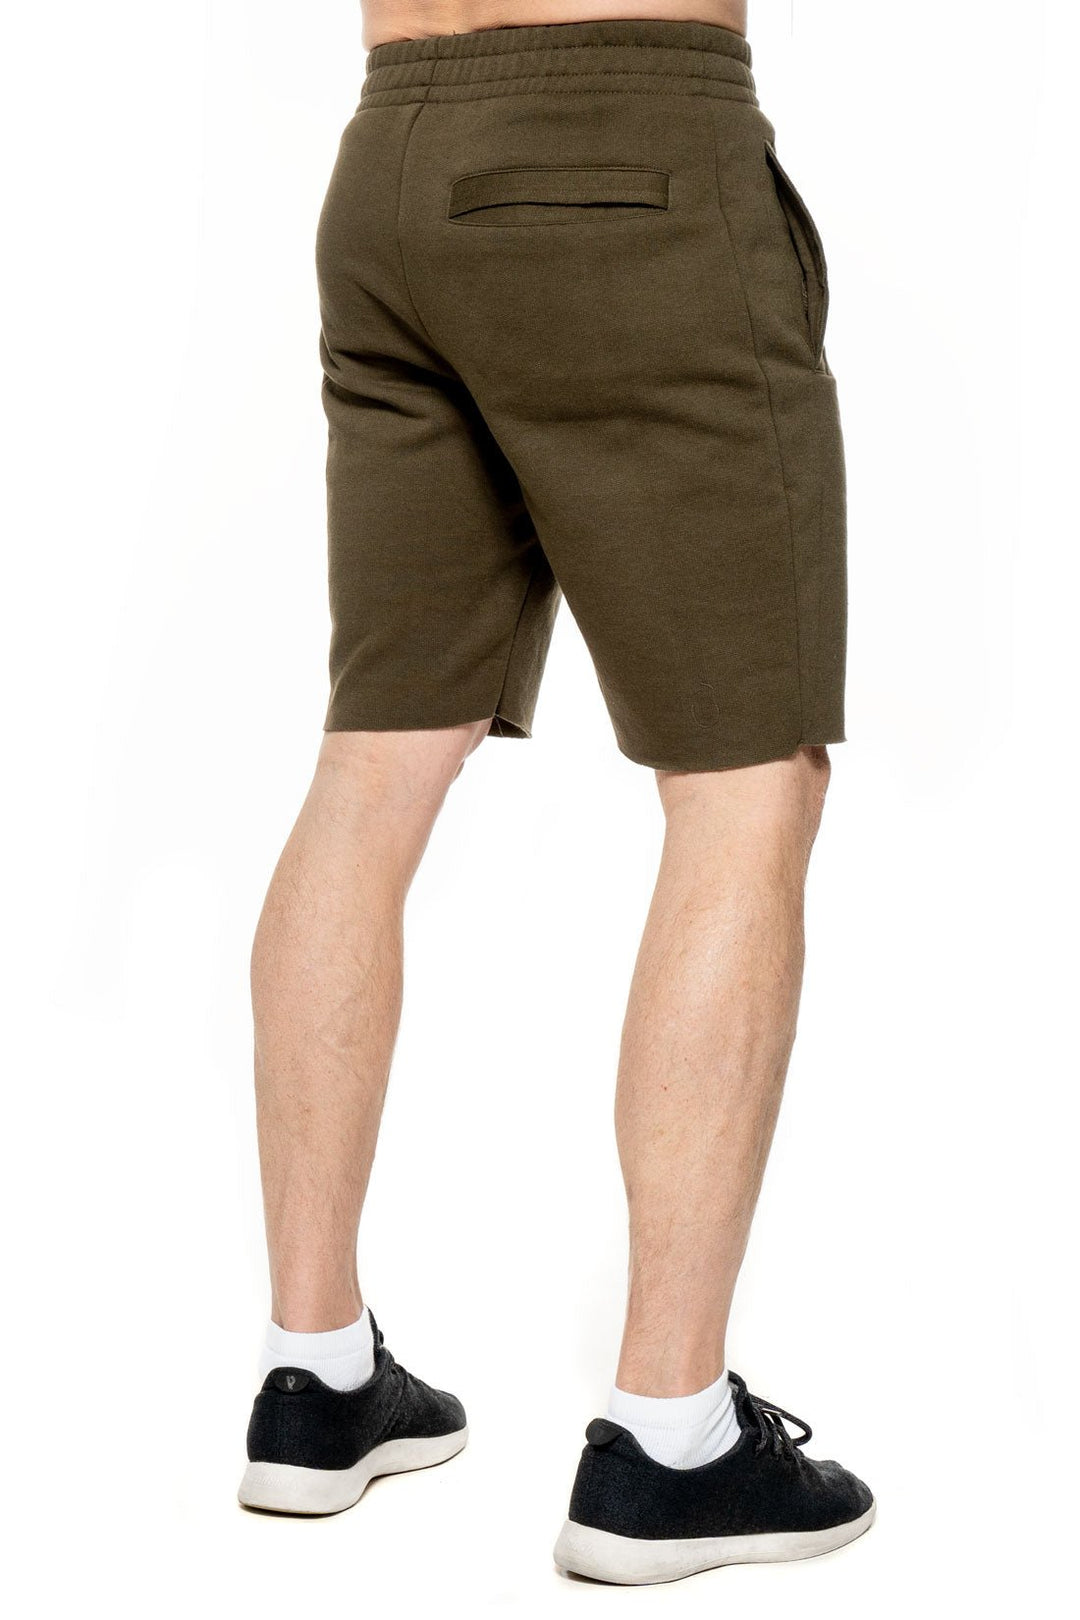 men's bamboo shorts